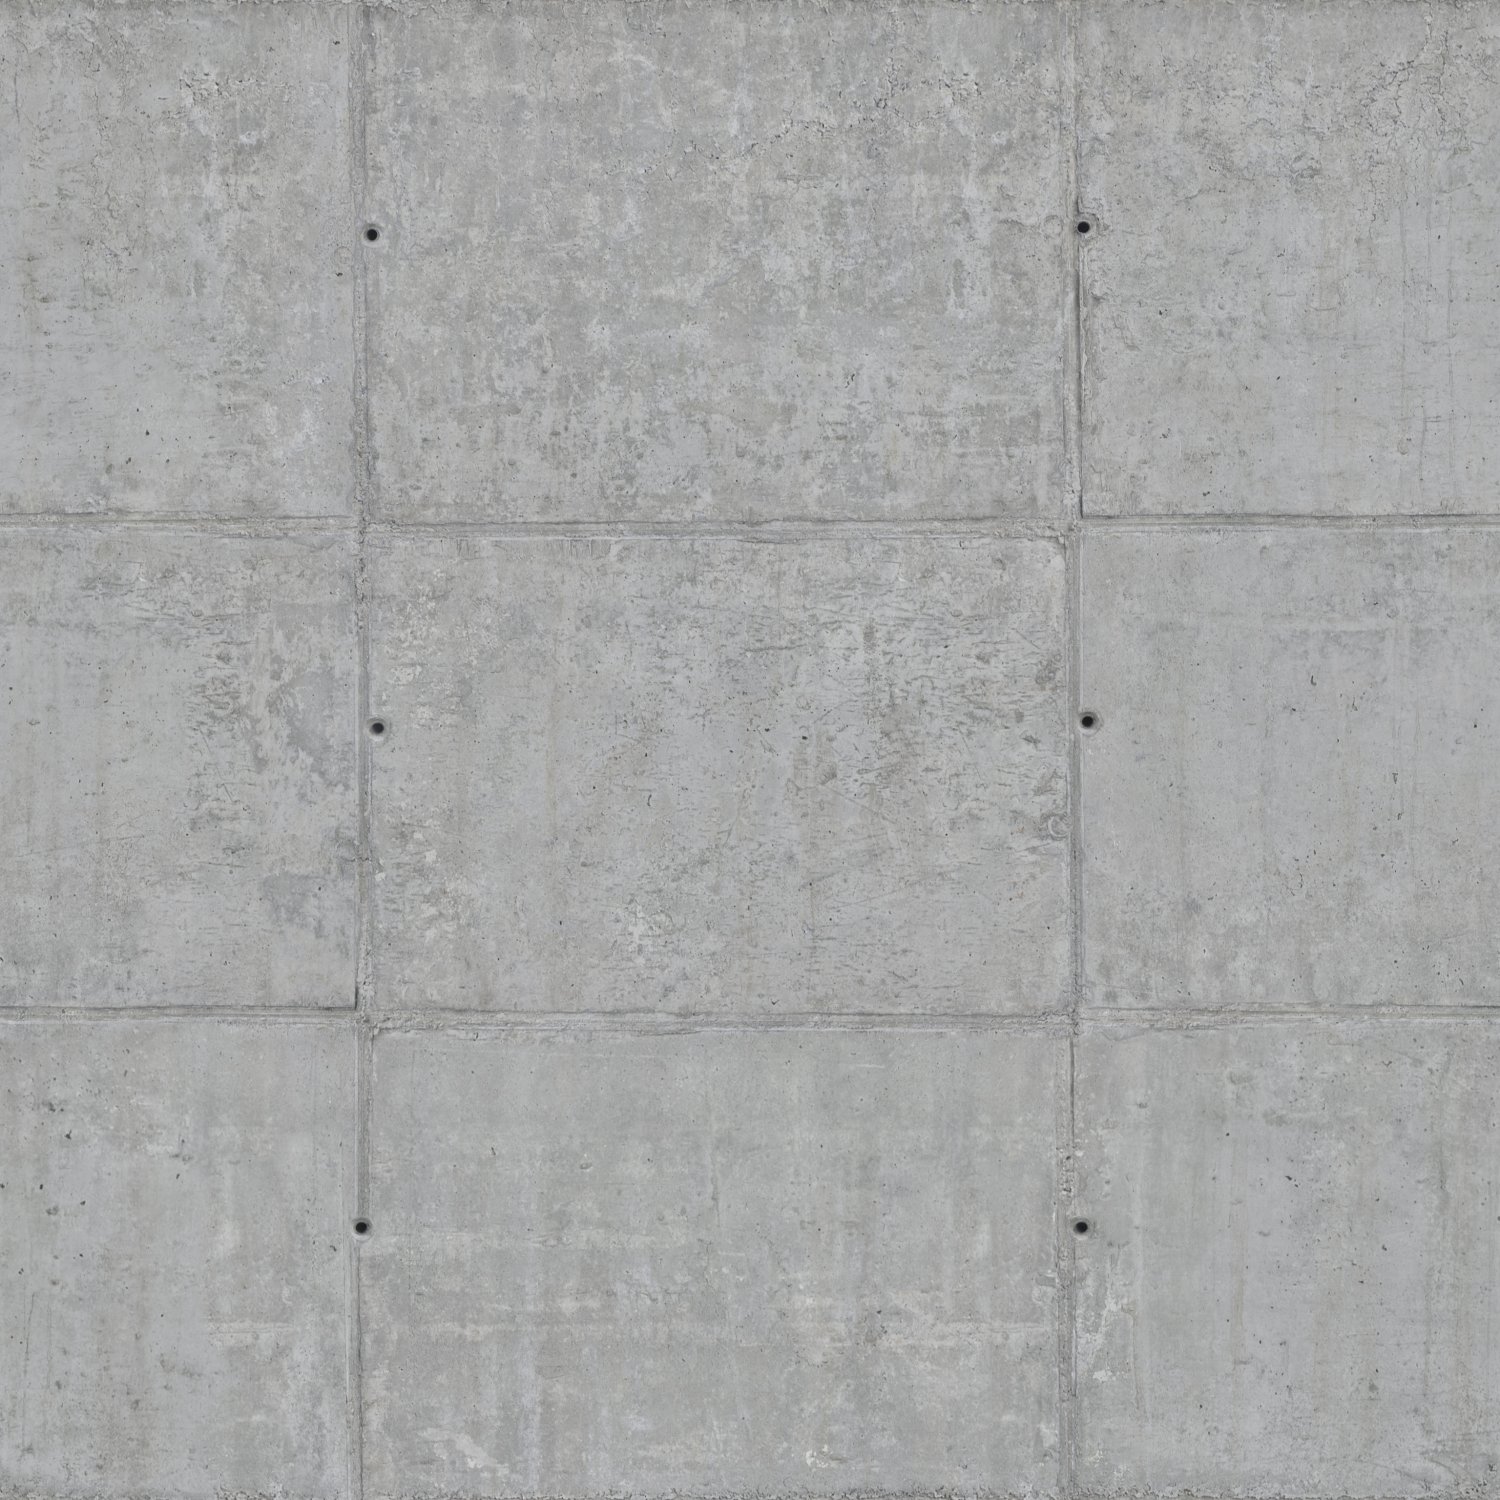 Ultra HD concrete runway textures